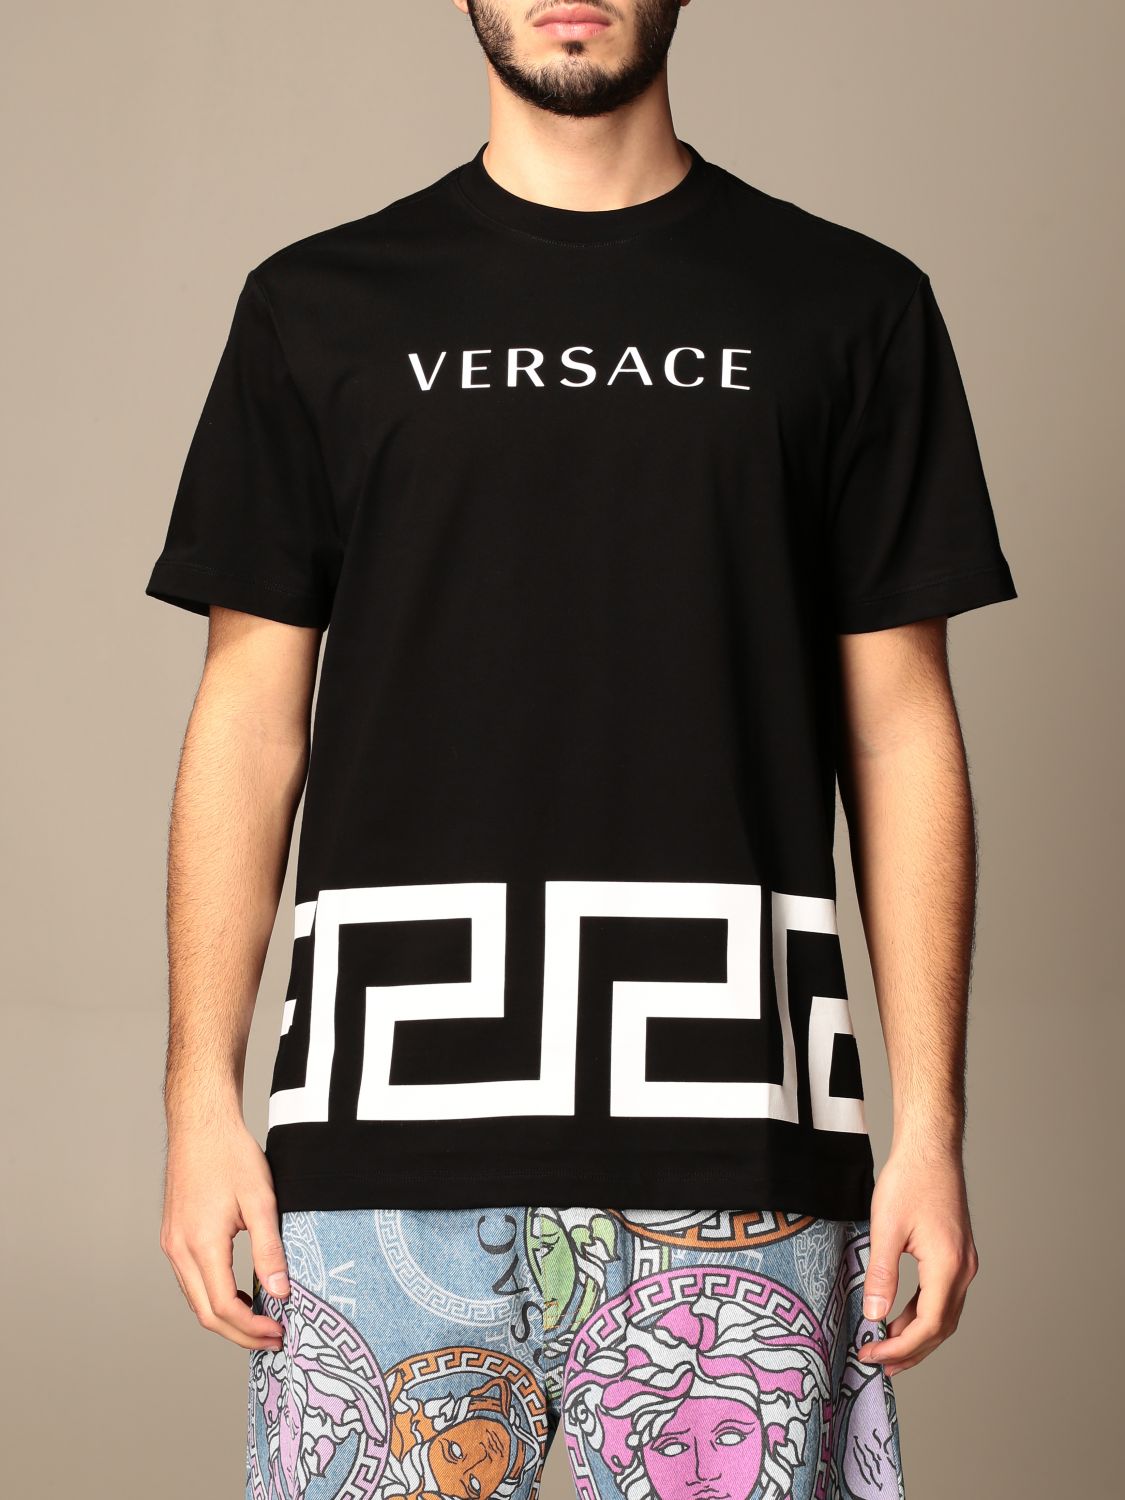 versace t shirt basic